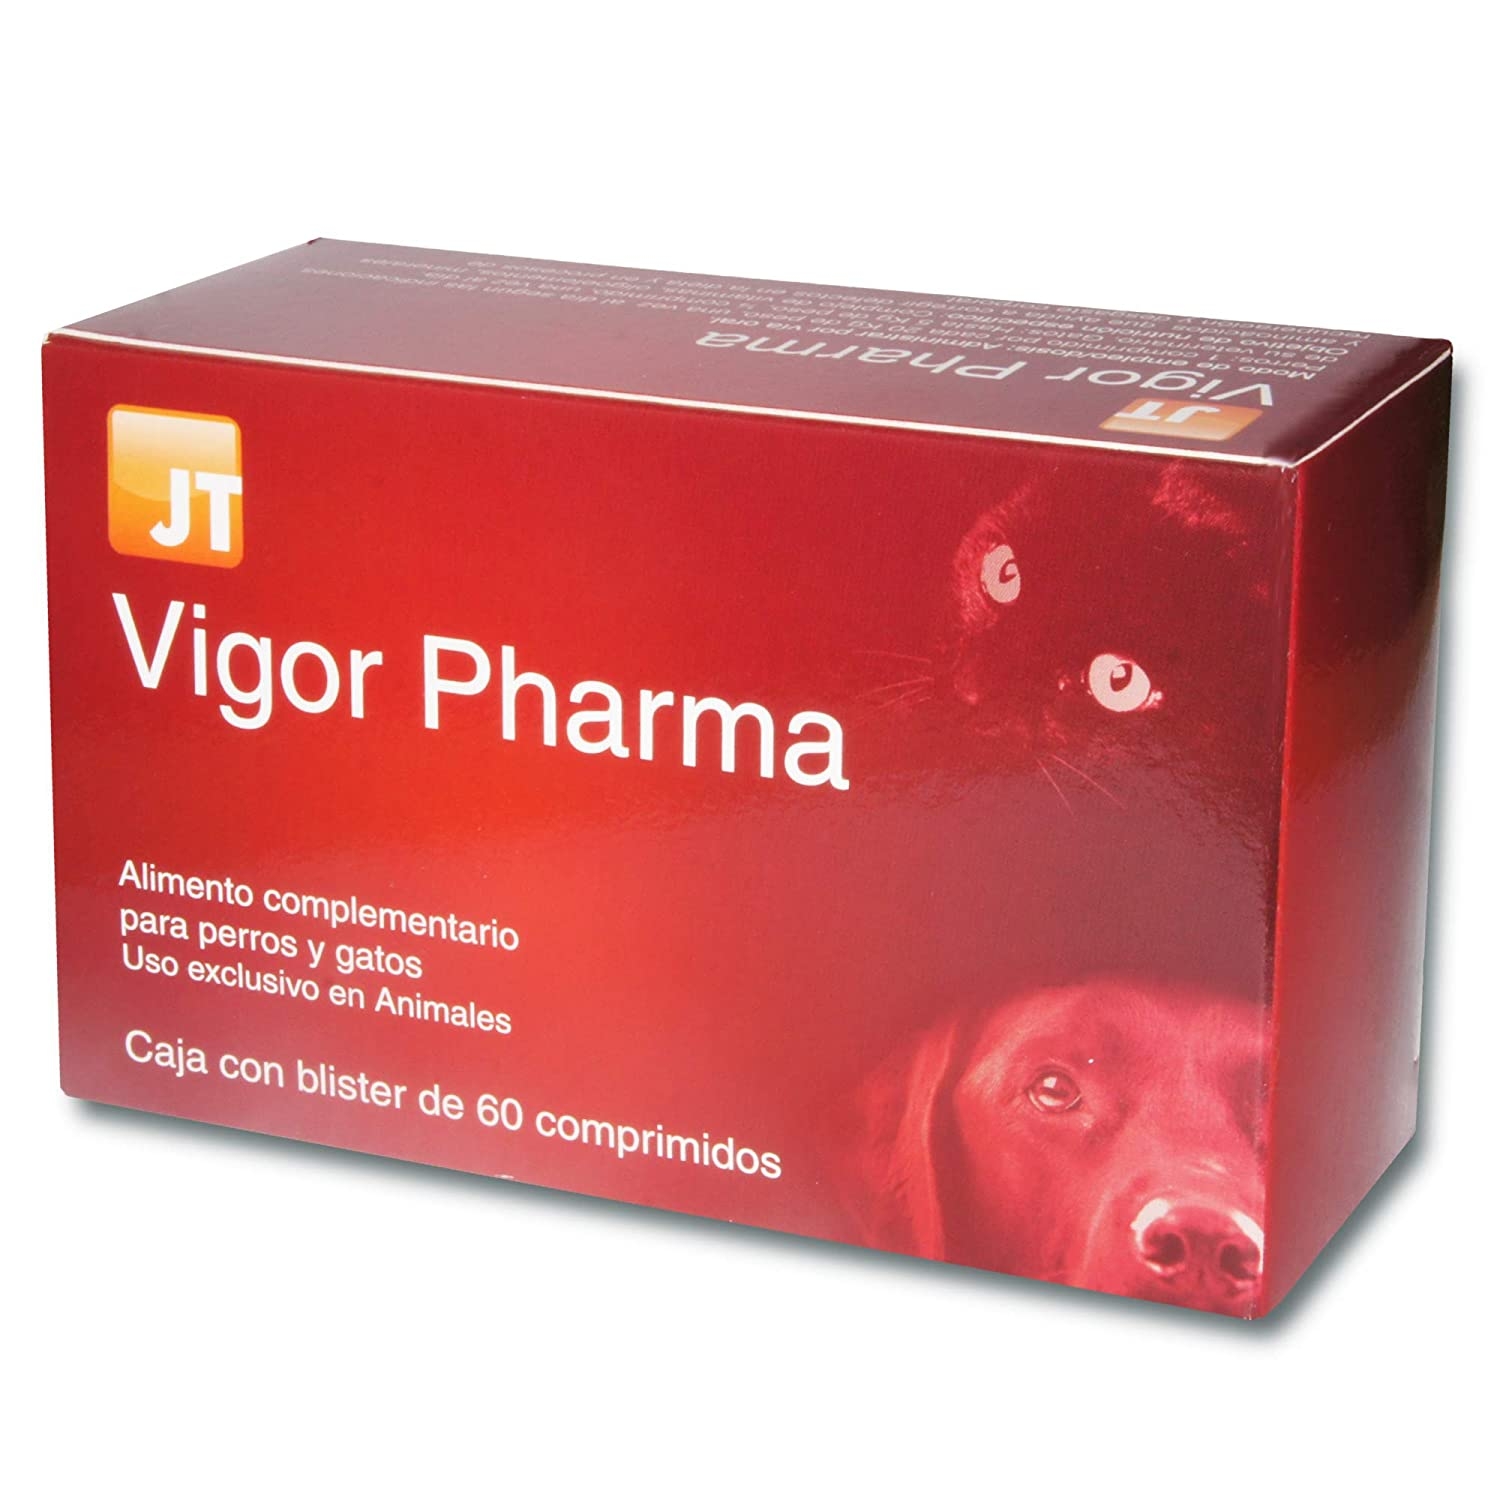 vitamine per cane